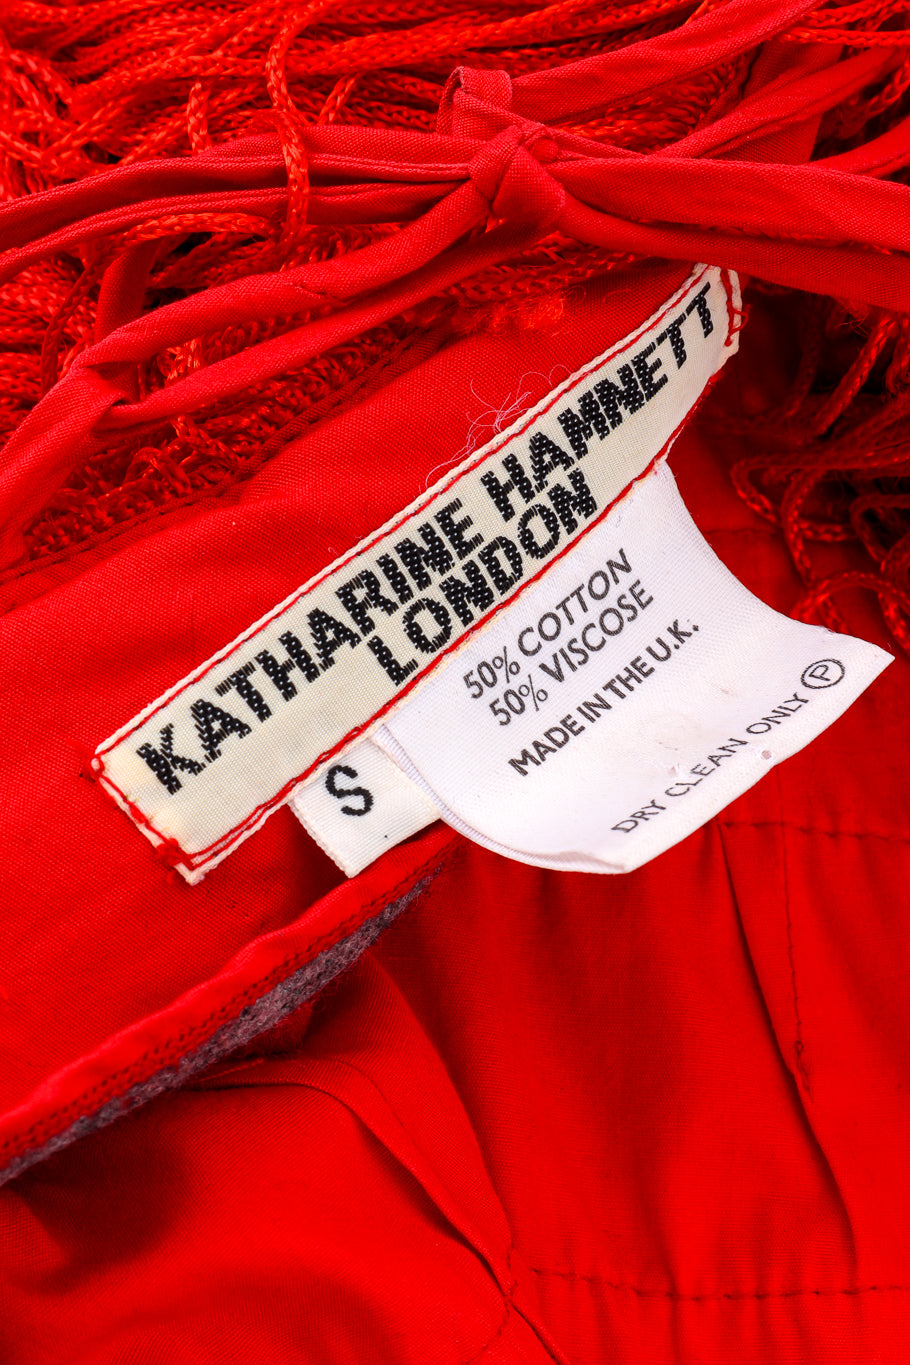 Katharine Hamnett Backless Fringe Dress signature label closeup @recessla